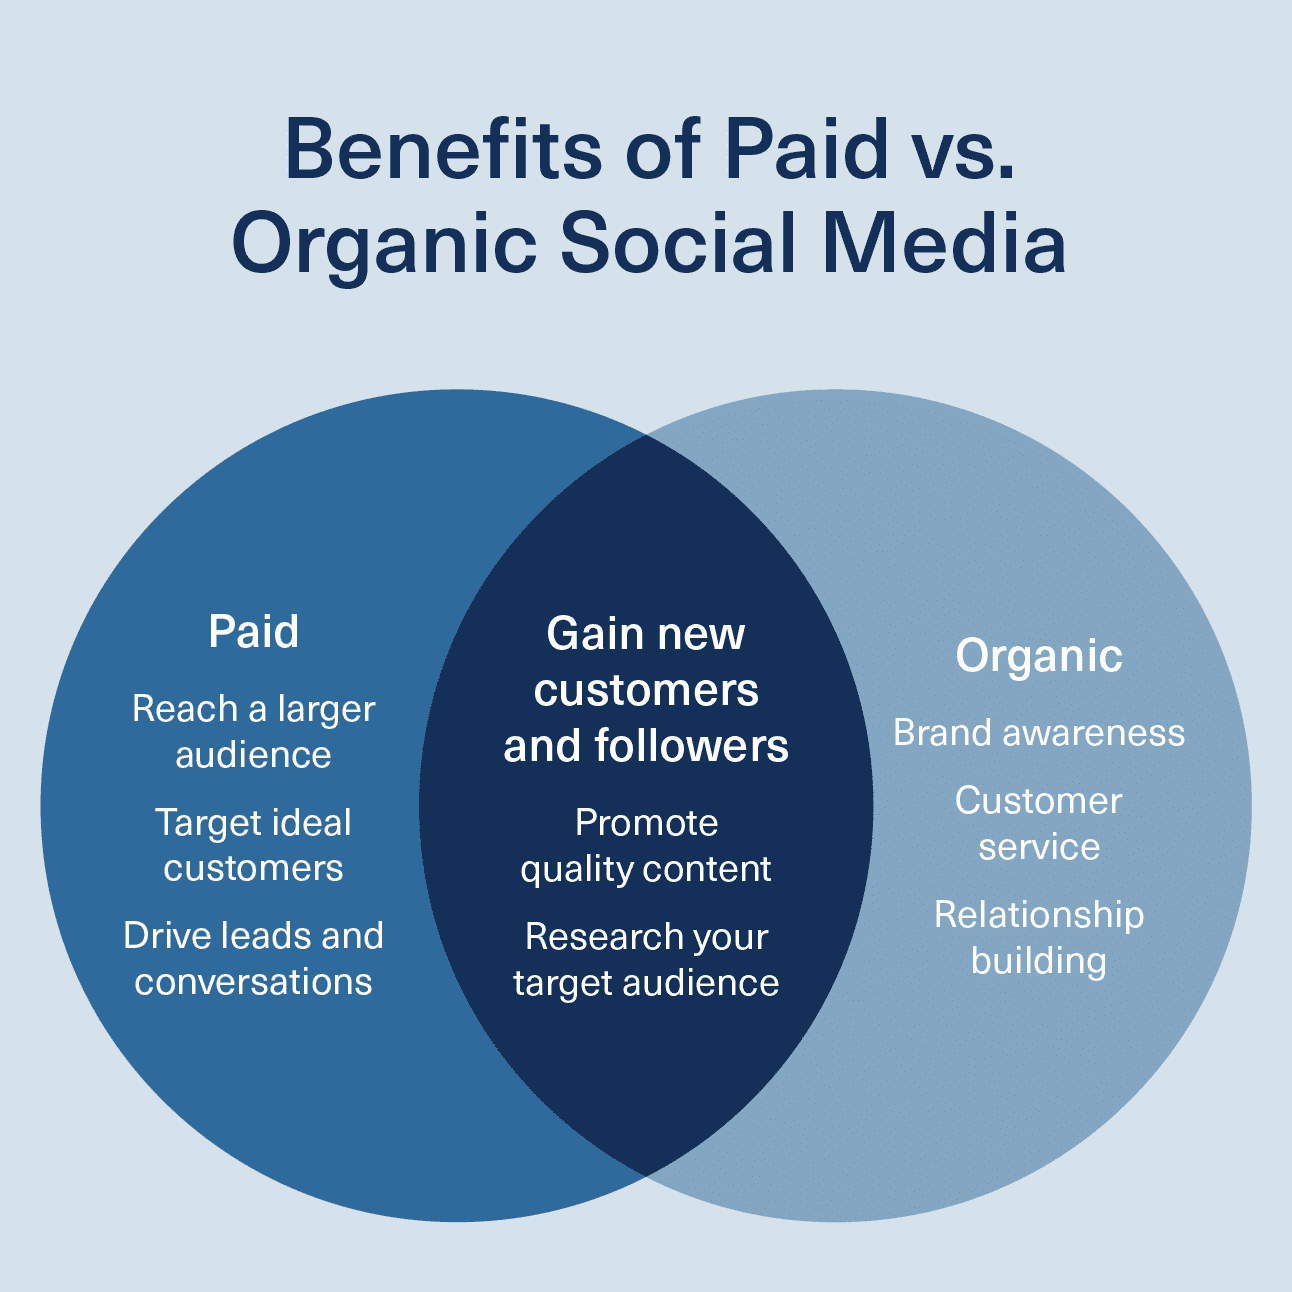 Benefits of Paid vs. Organic Social Media